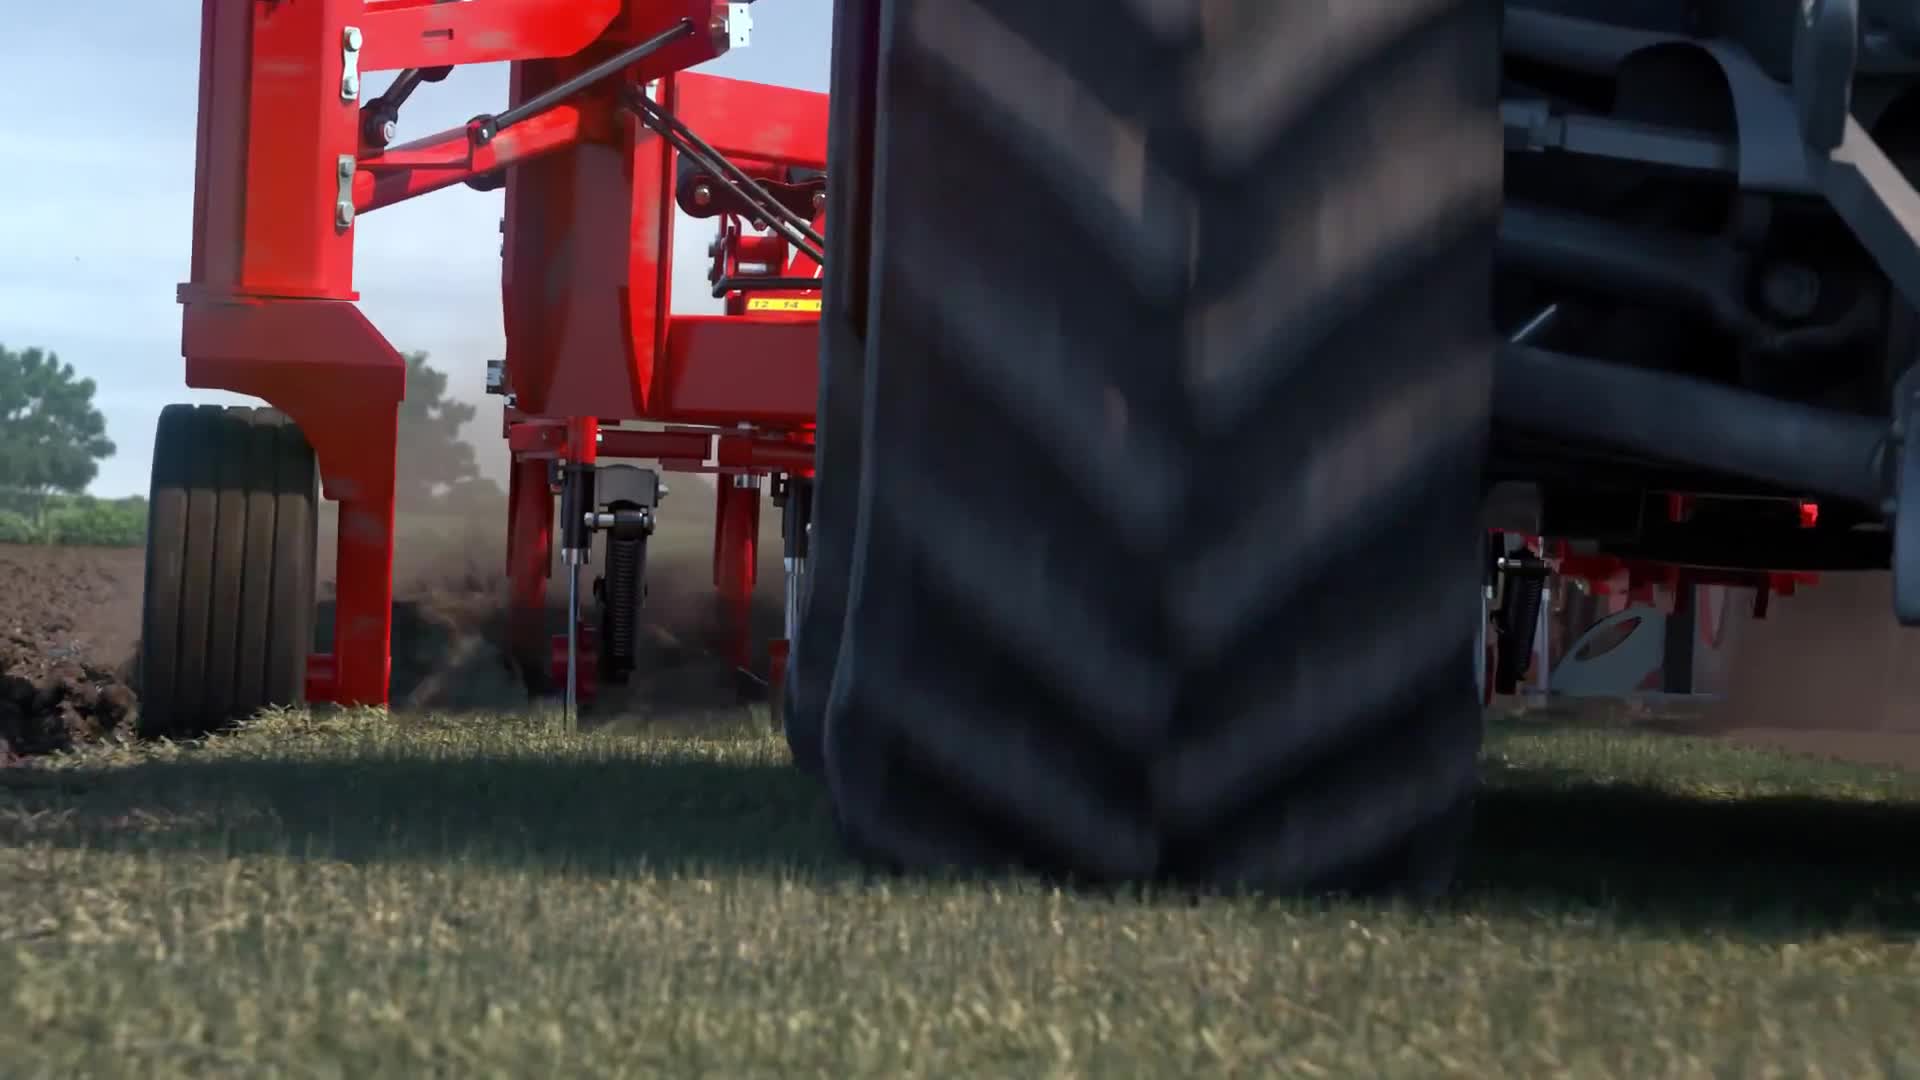 Farming Simulator 17 - E3 Trailer